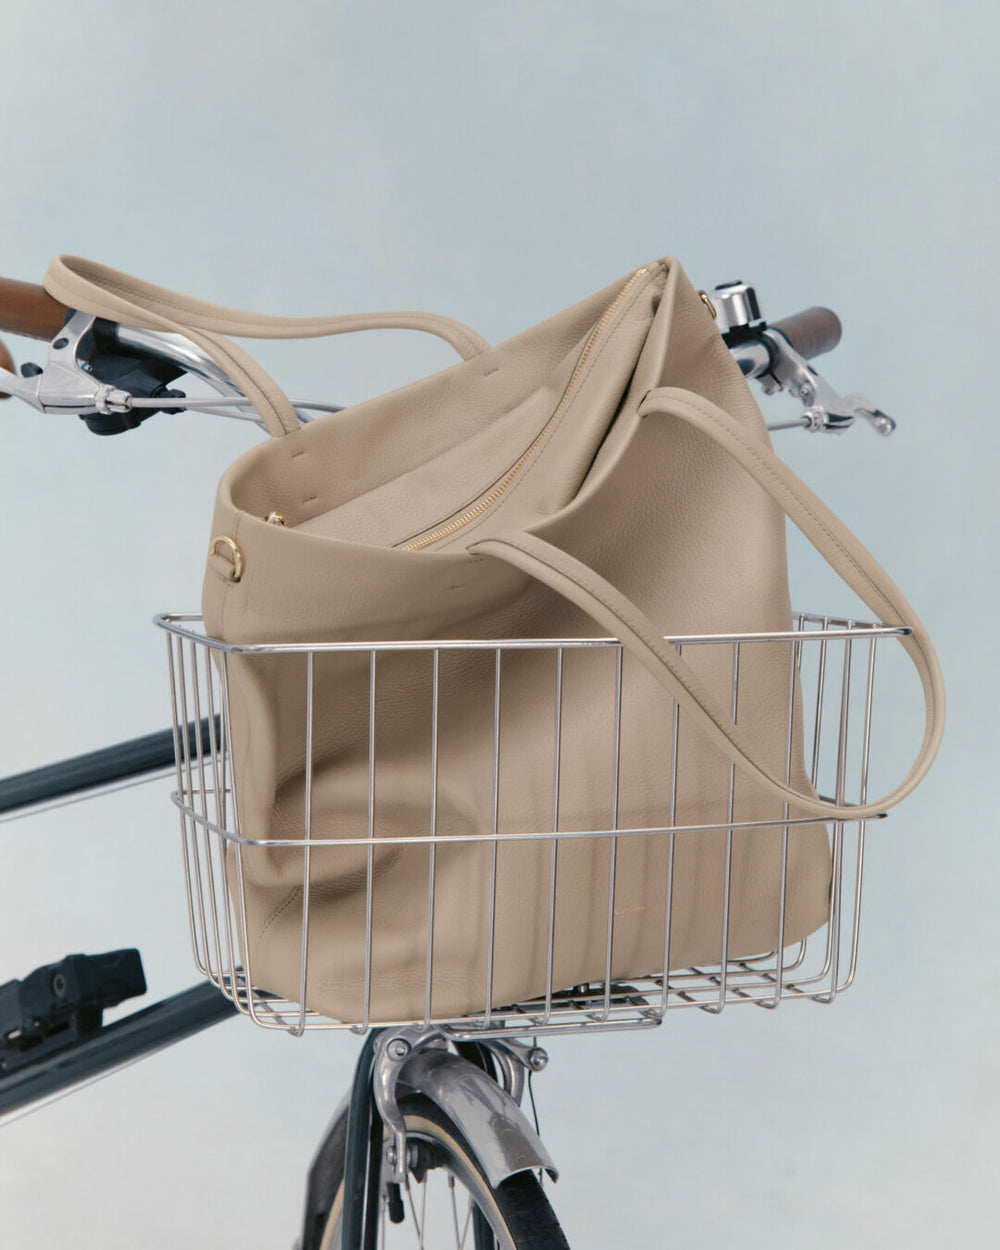 Bag in a bicycle basket with bike handlebars visible.